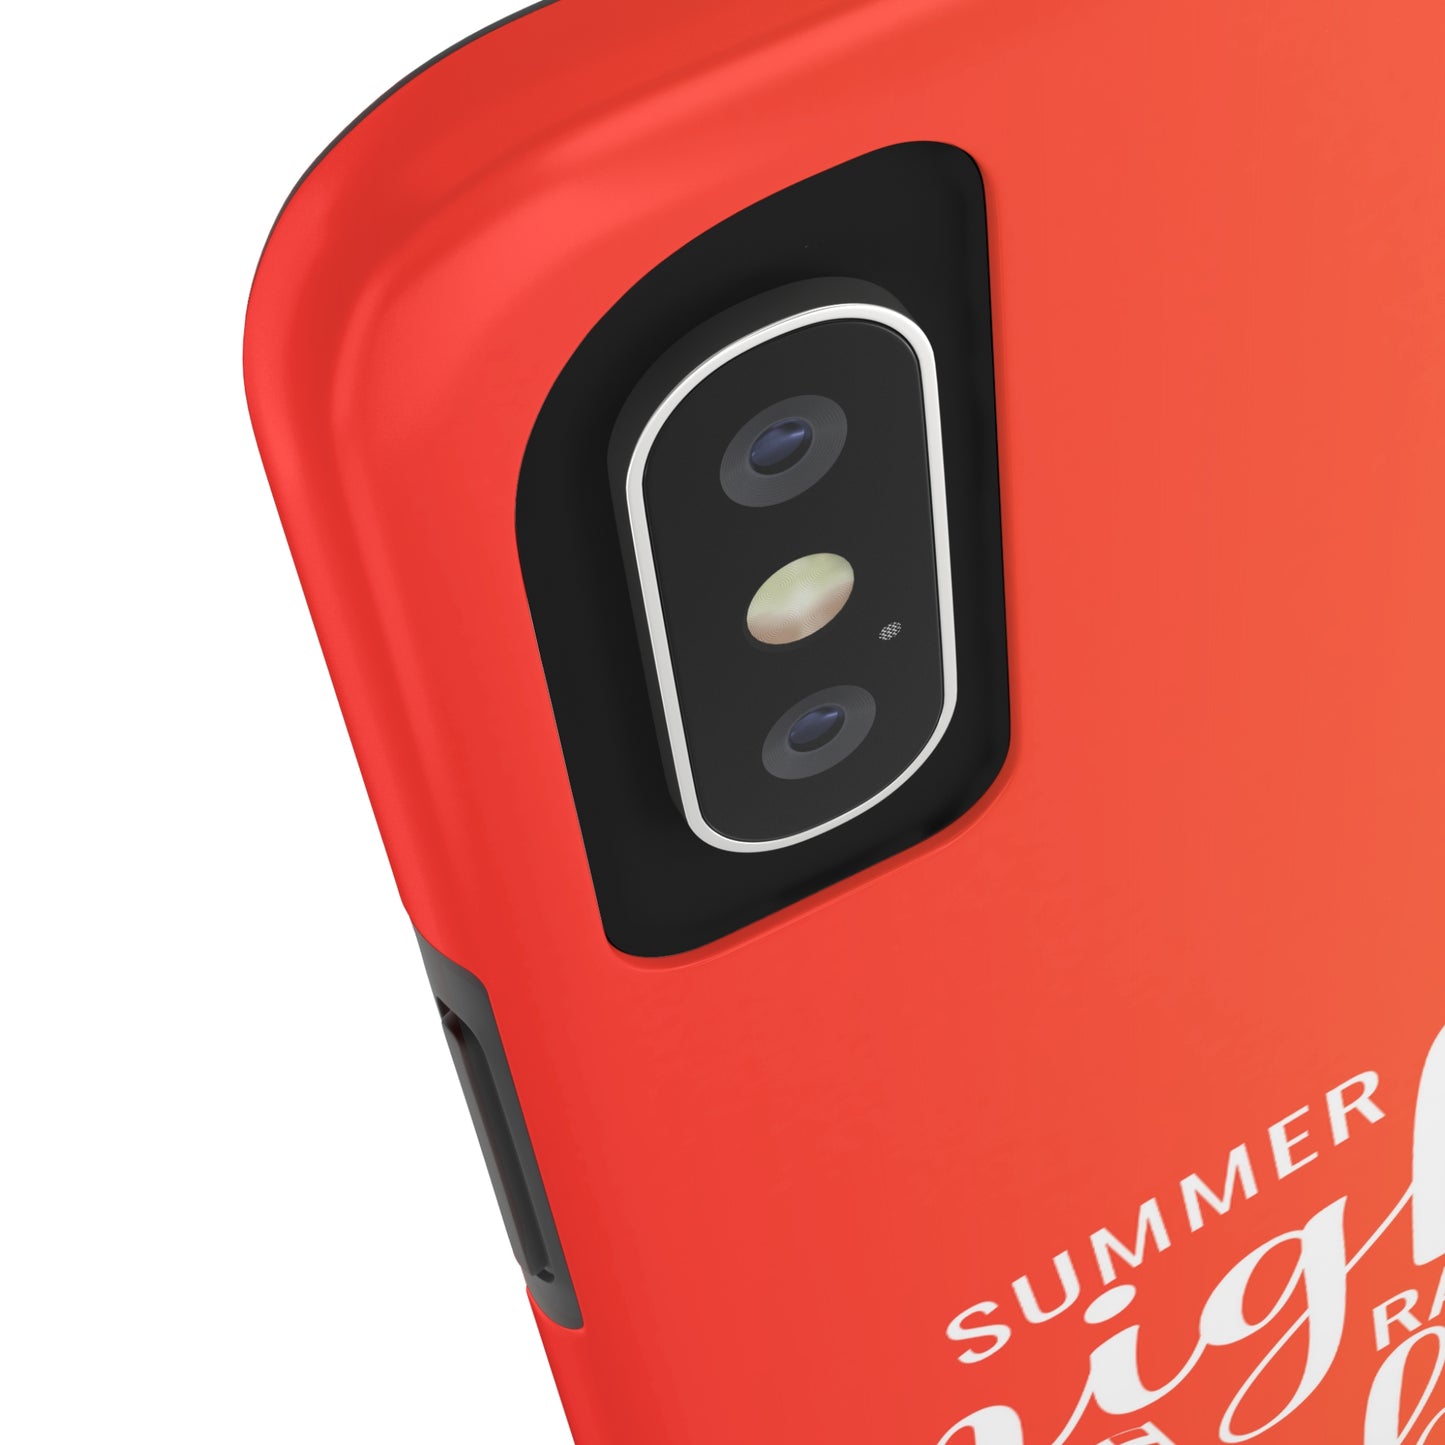 Summer Nights Racetrack Lights Orange Tough Phone Cases